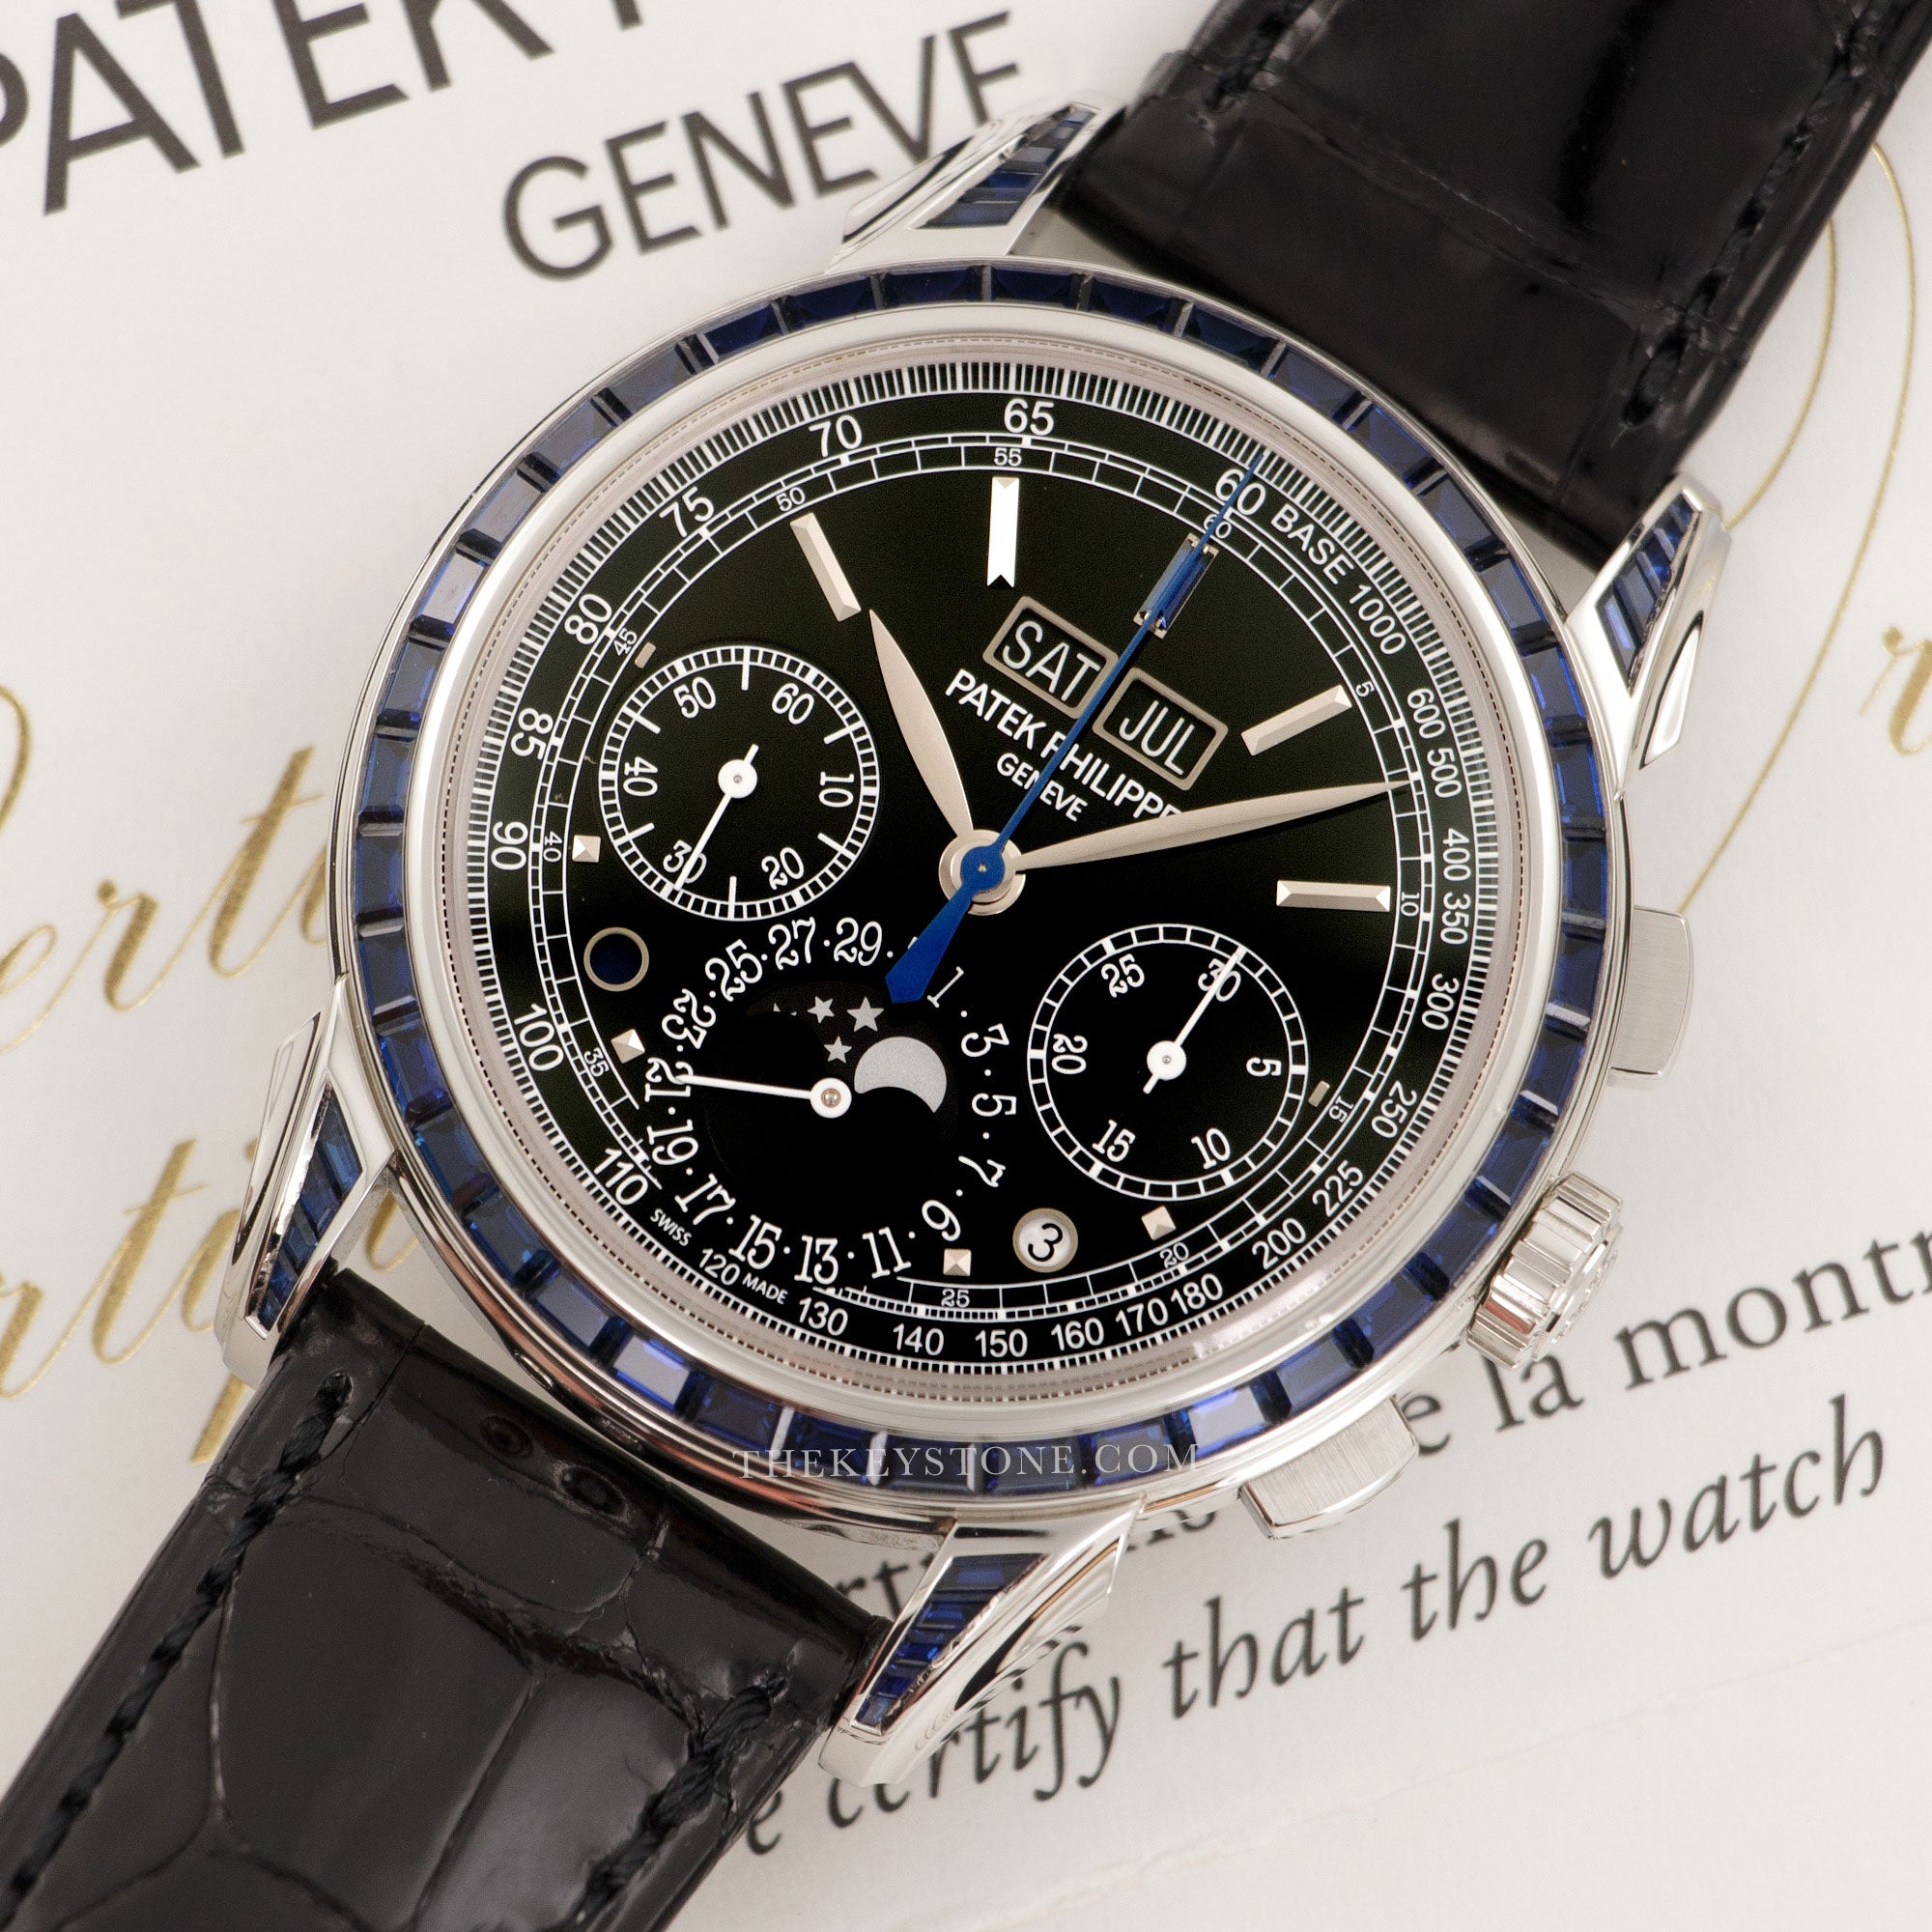 Patek Philippe - Patek Philippe Platinum Perpetual Calendar Chrono Sapphire Watch Ref. 5271 - The Keystone Watches